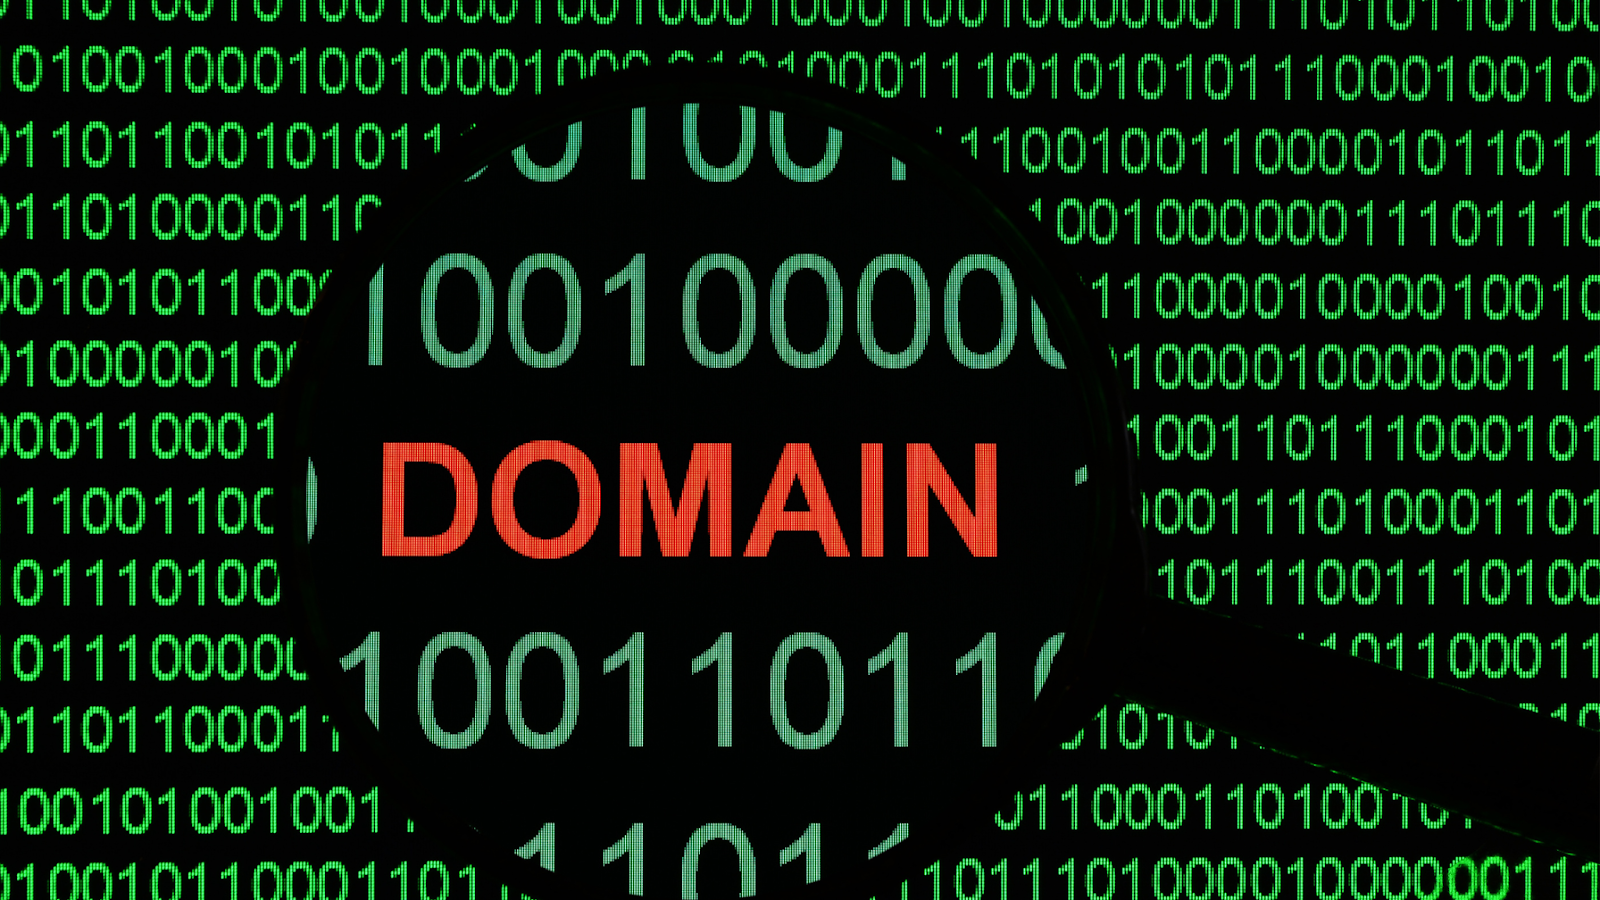 Check Domain Name Availability and Alternatives to Avoid Copyright